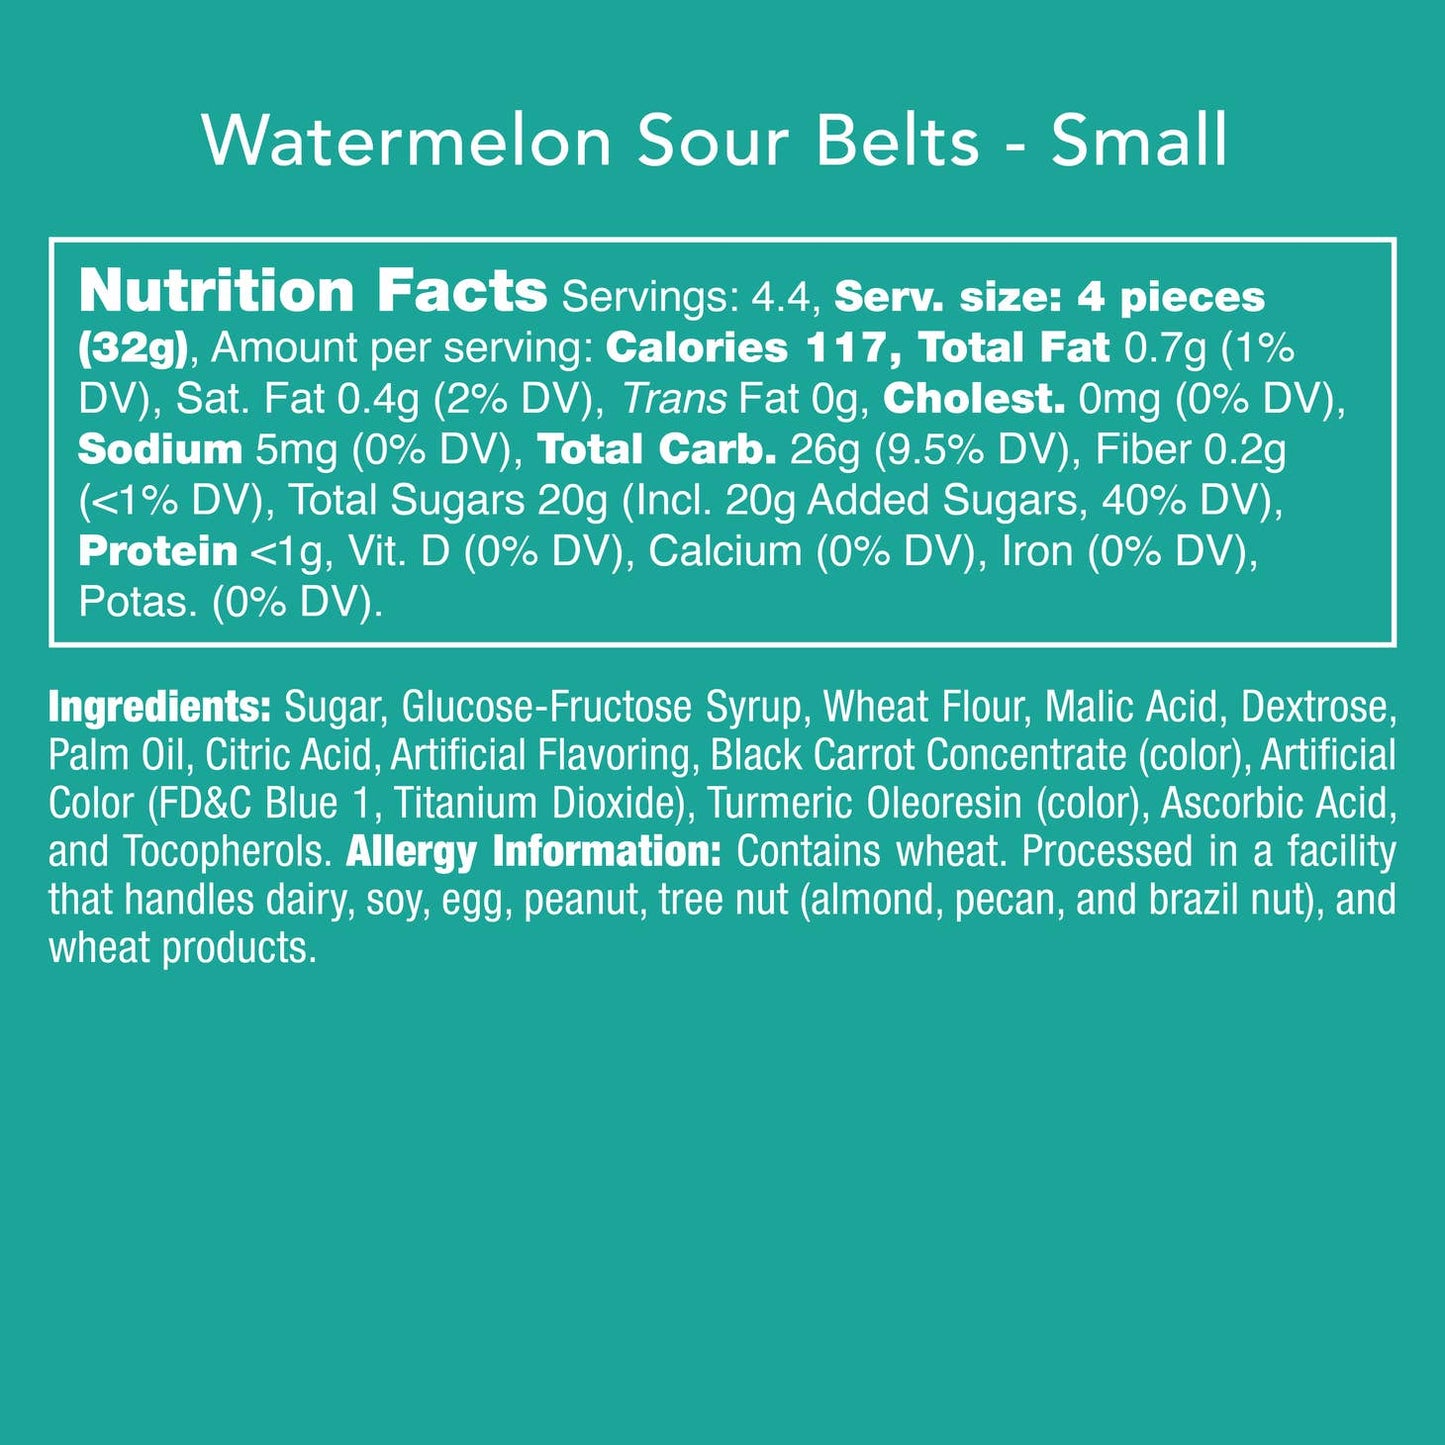 Watermelon Sour Belt Candy